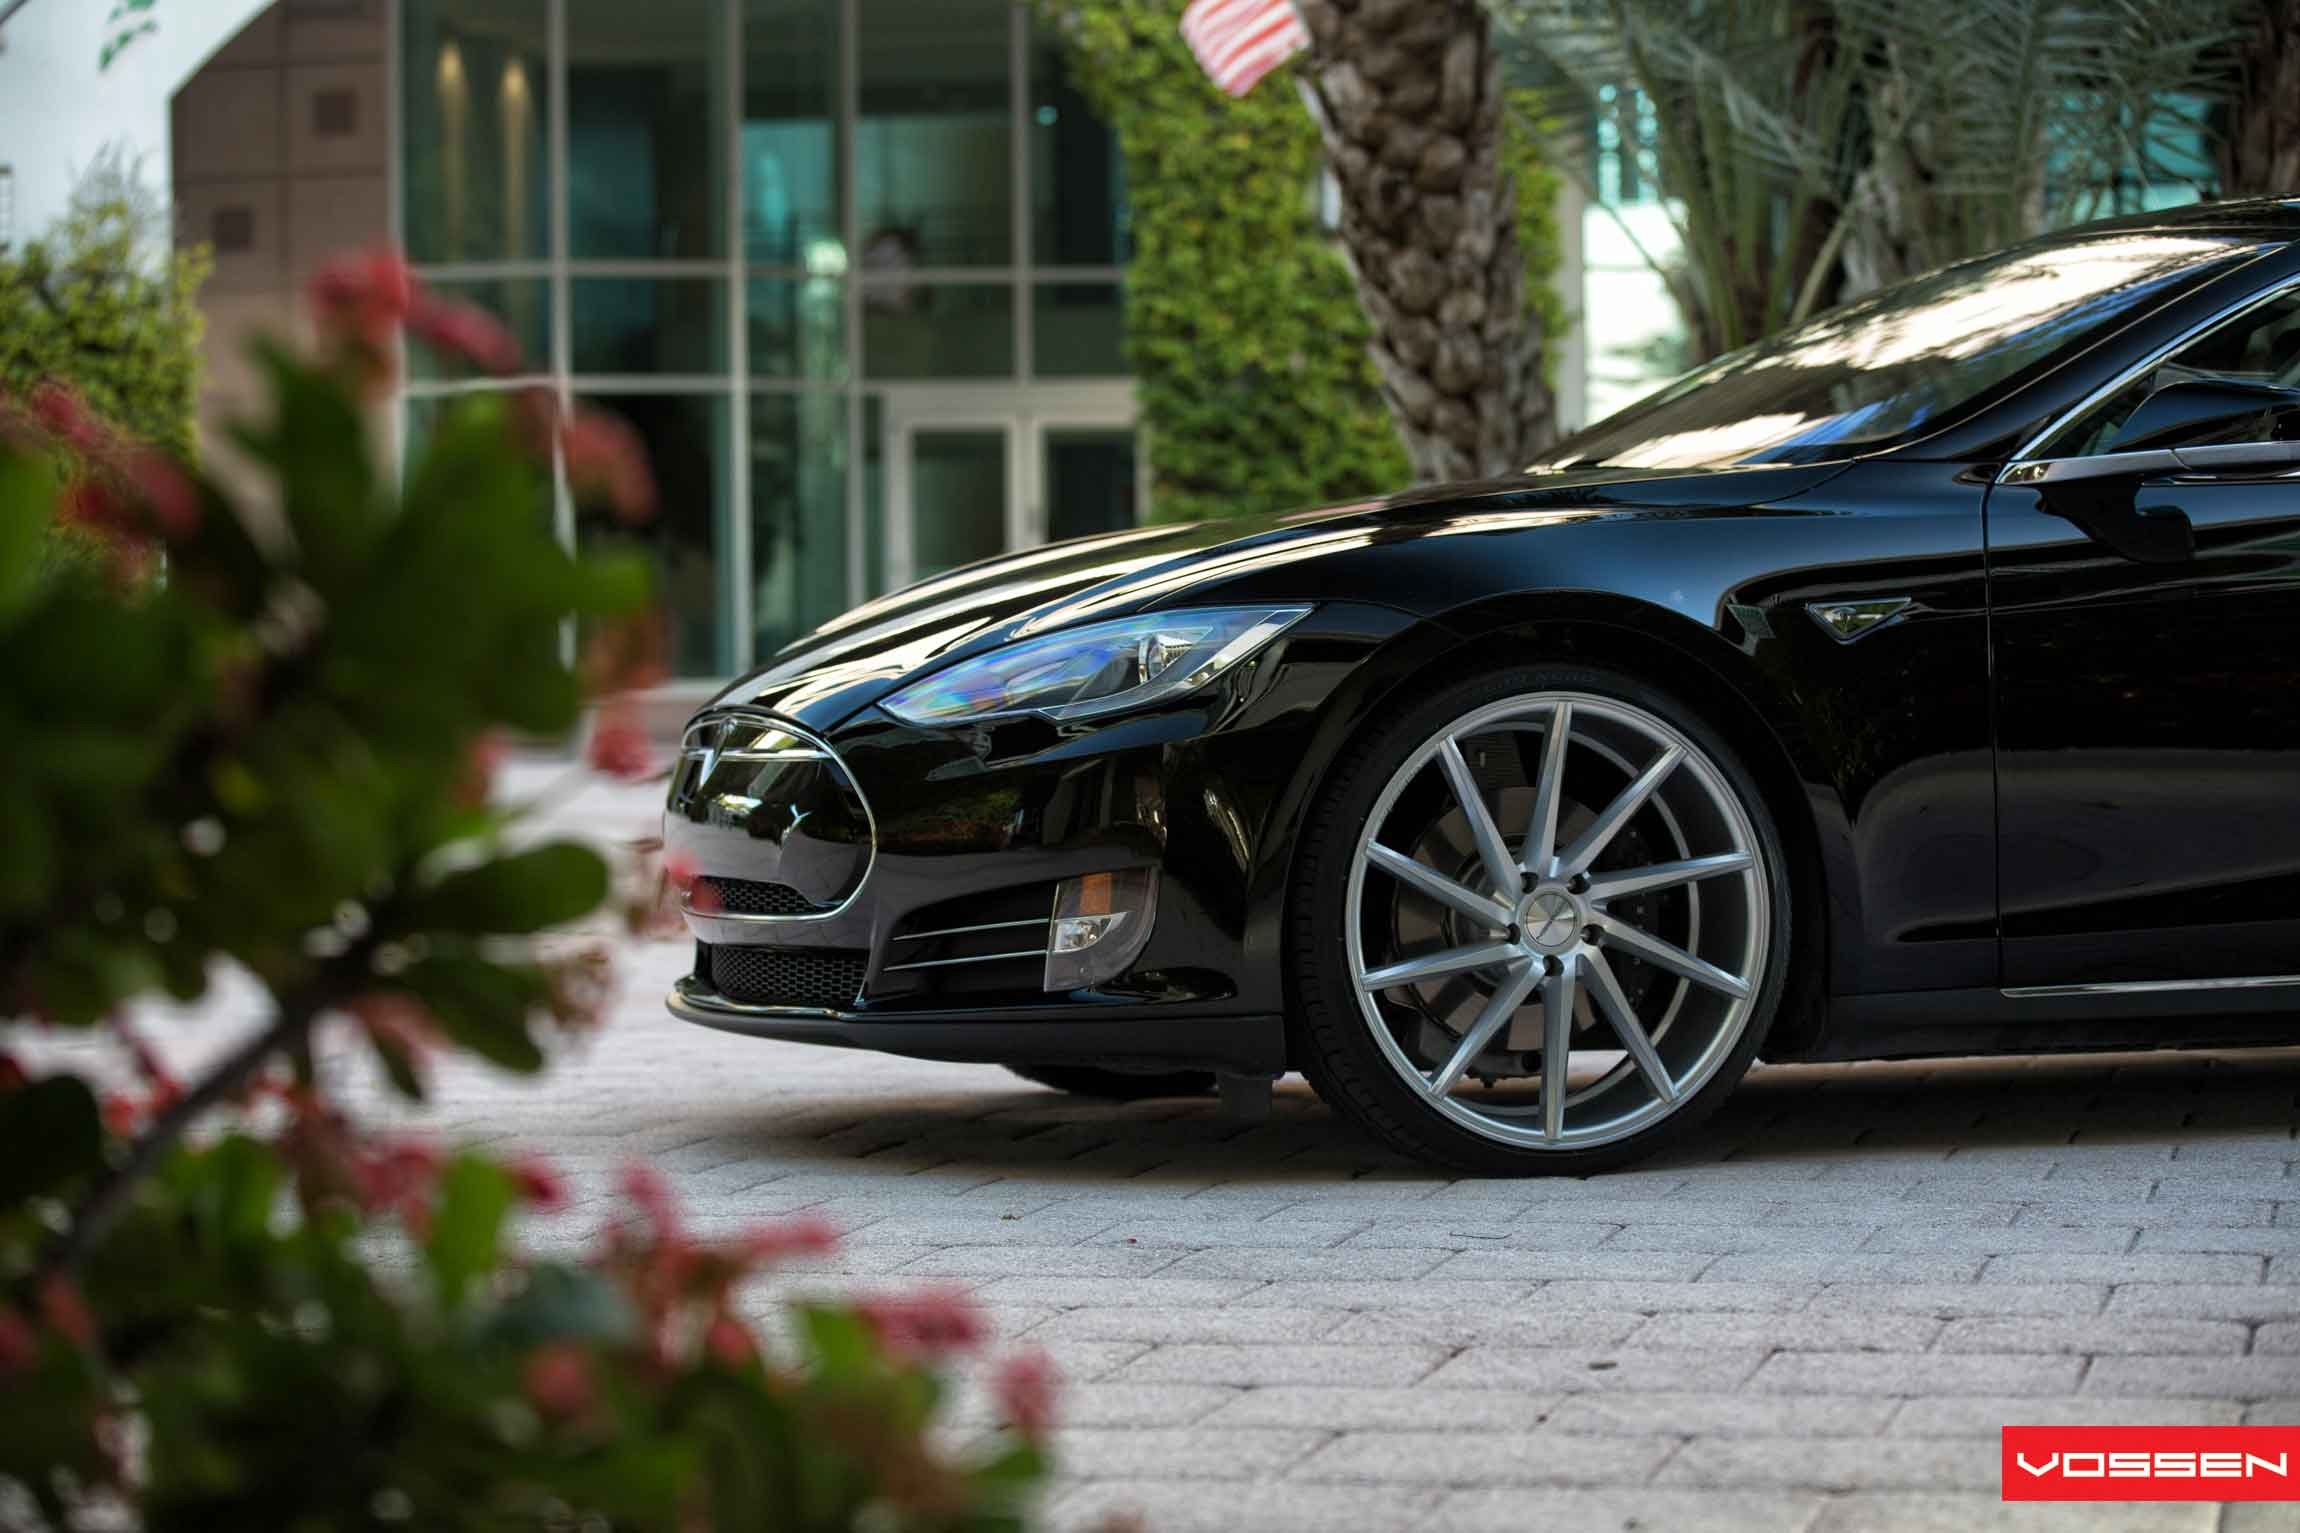 Chrome Vossen Rims on Black Tesla Model S - Photo by Vossen